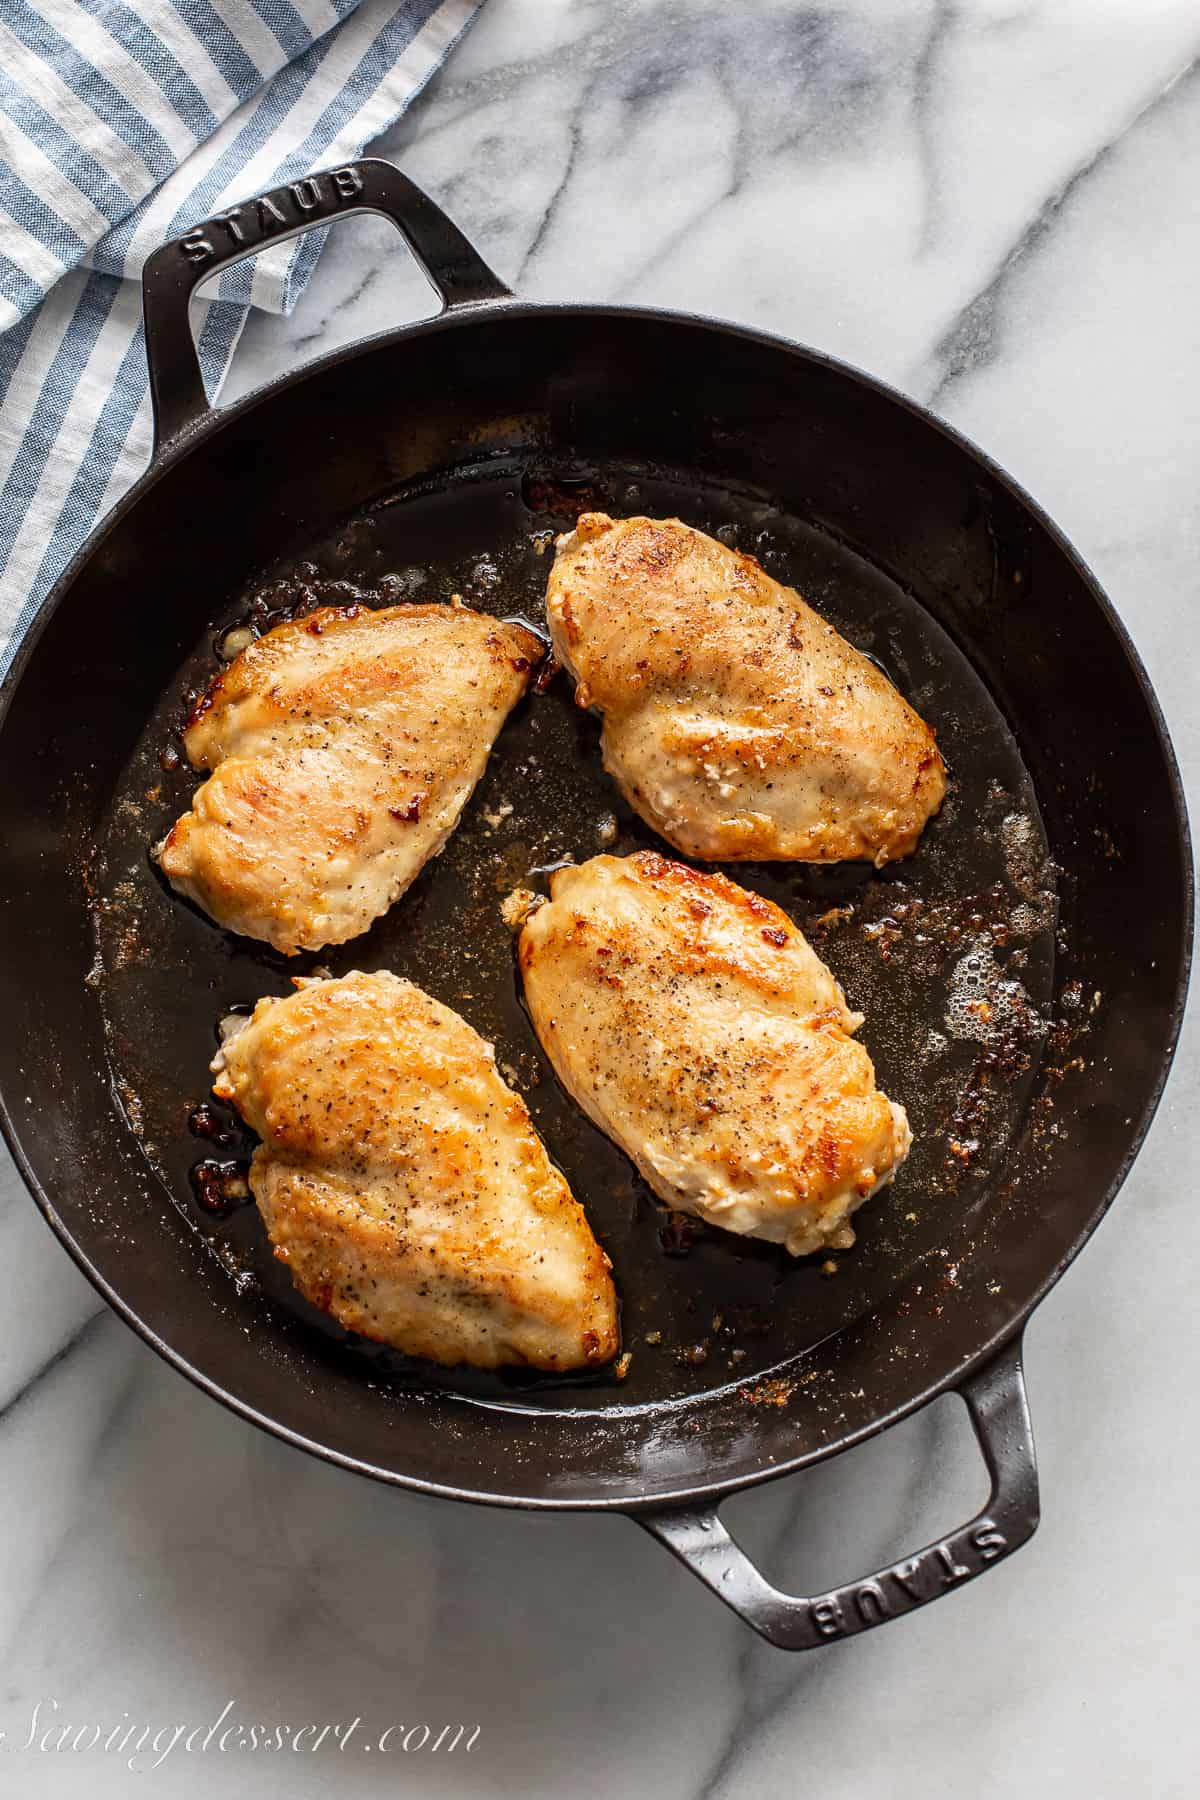 Skillet fried chicken breasts